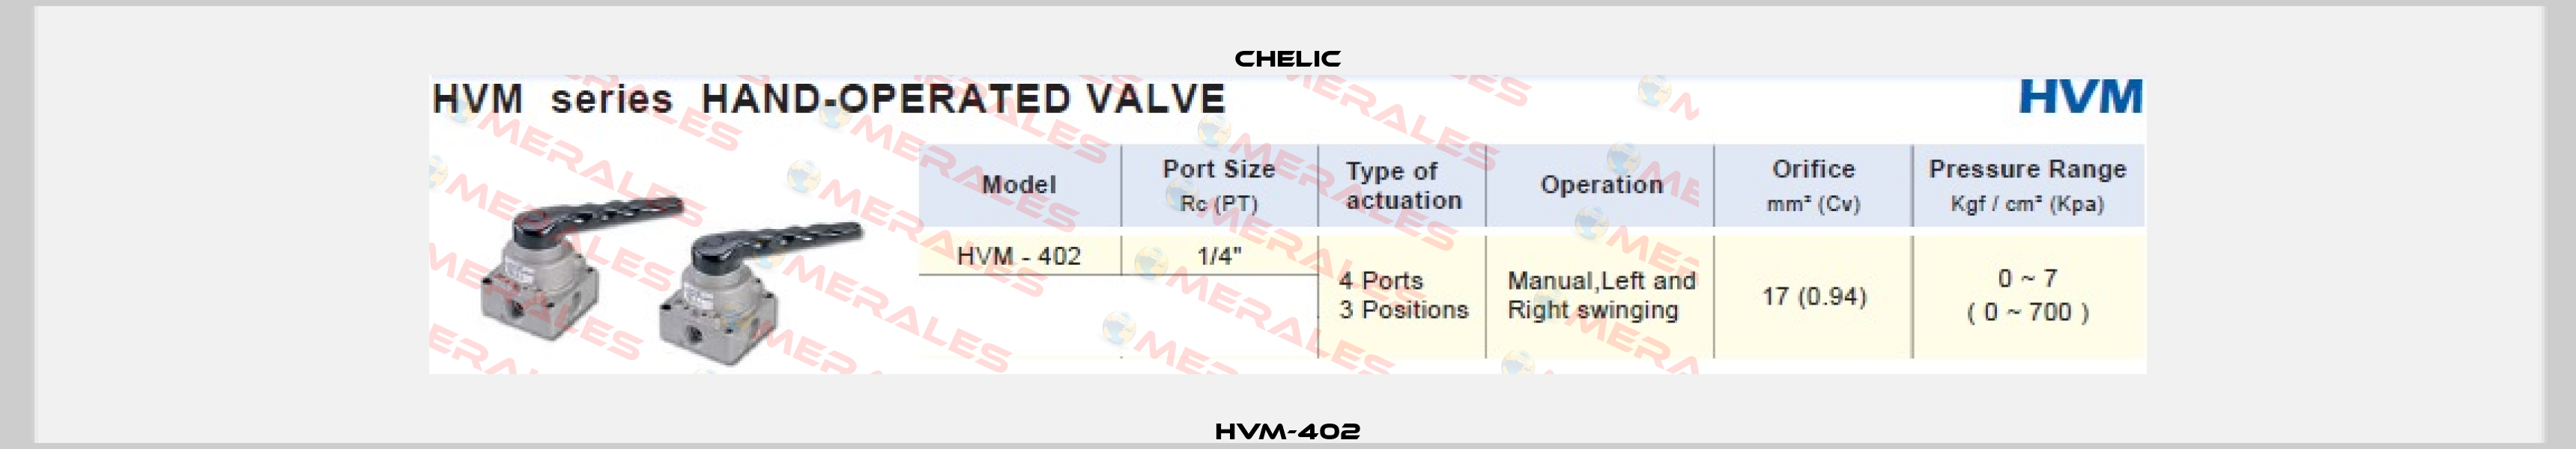 HVM-402 Chelic